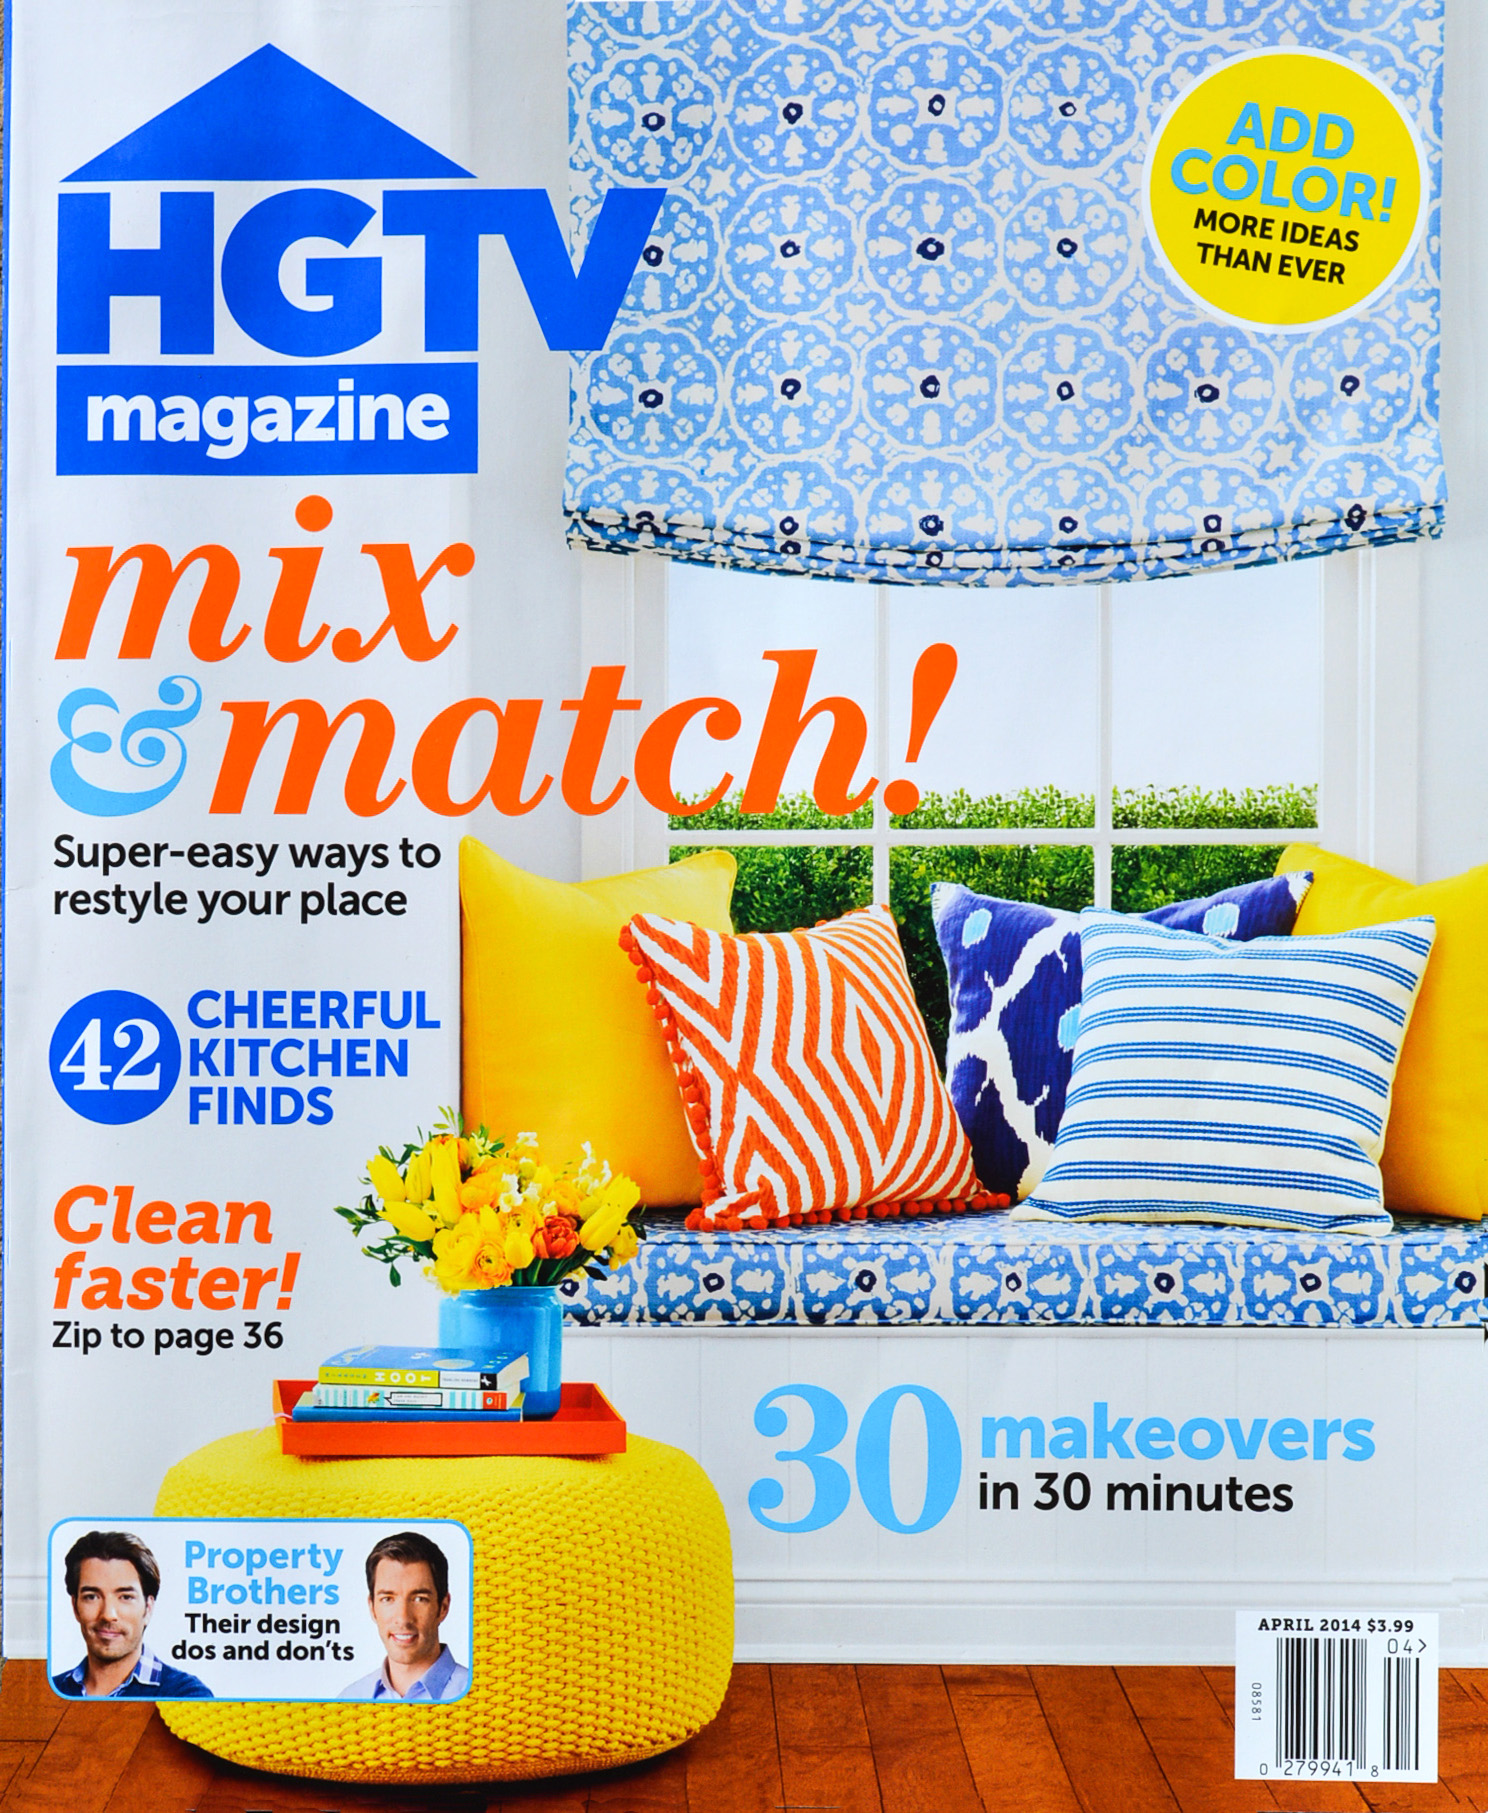 HGTV Magazine, April, 2014: Cover